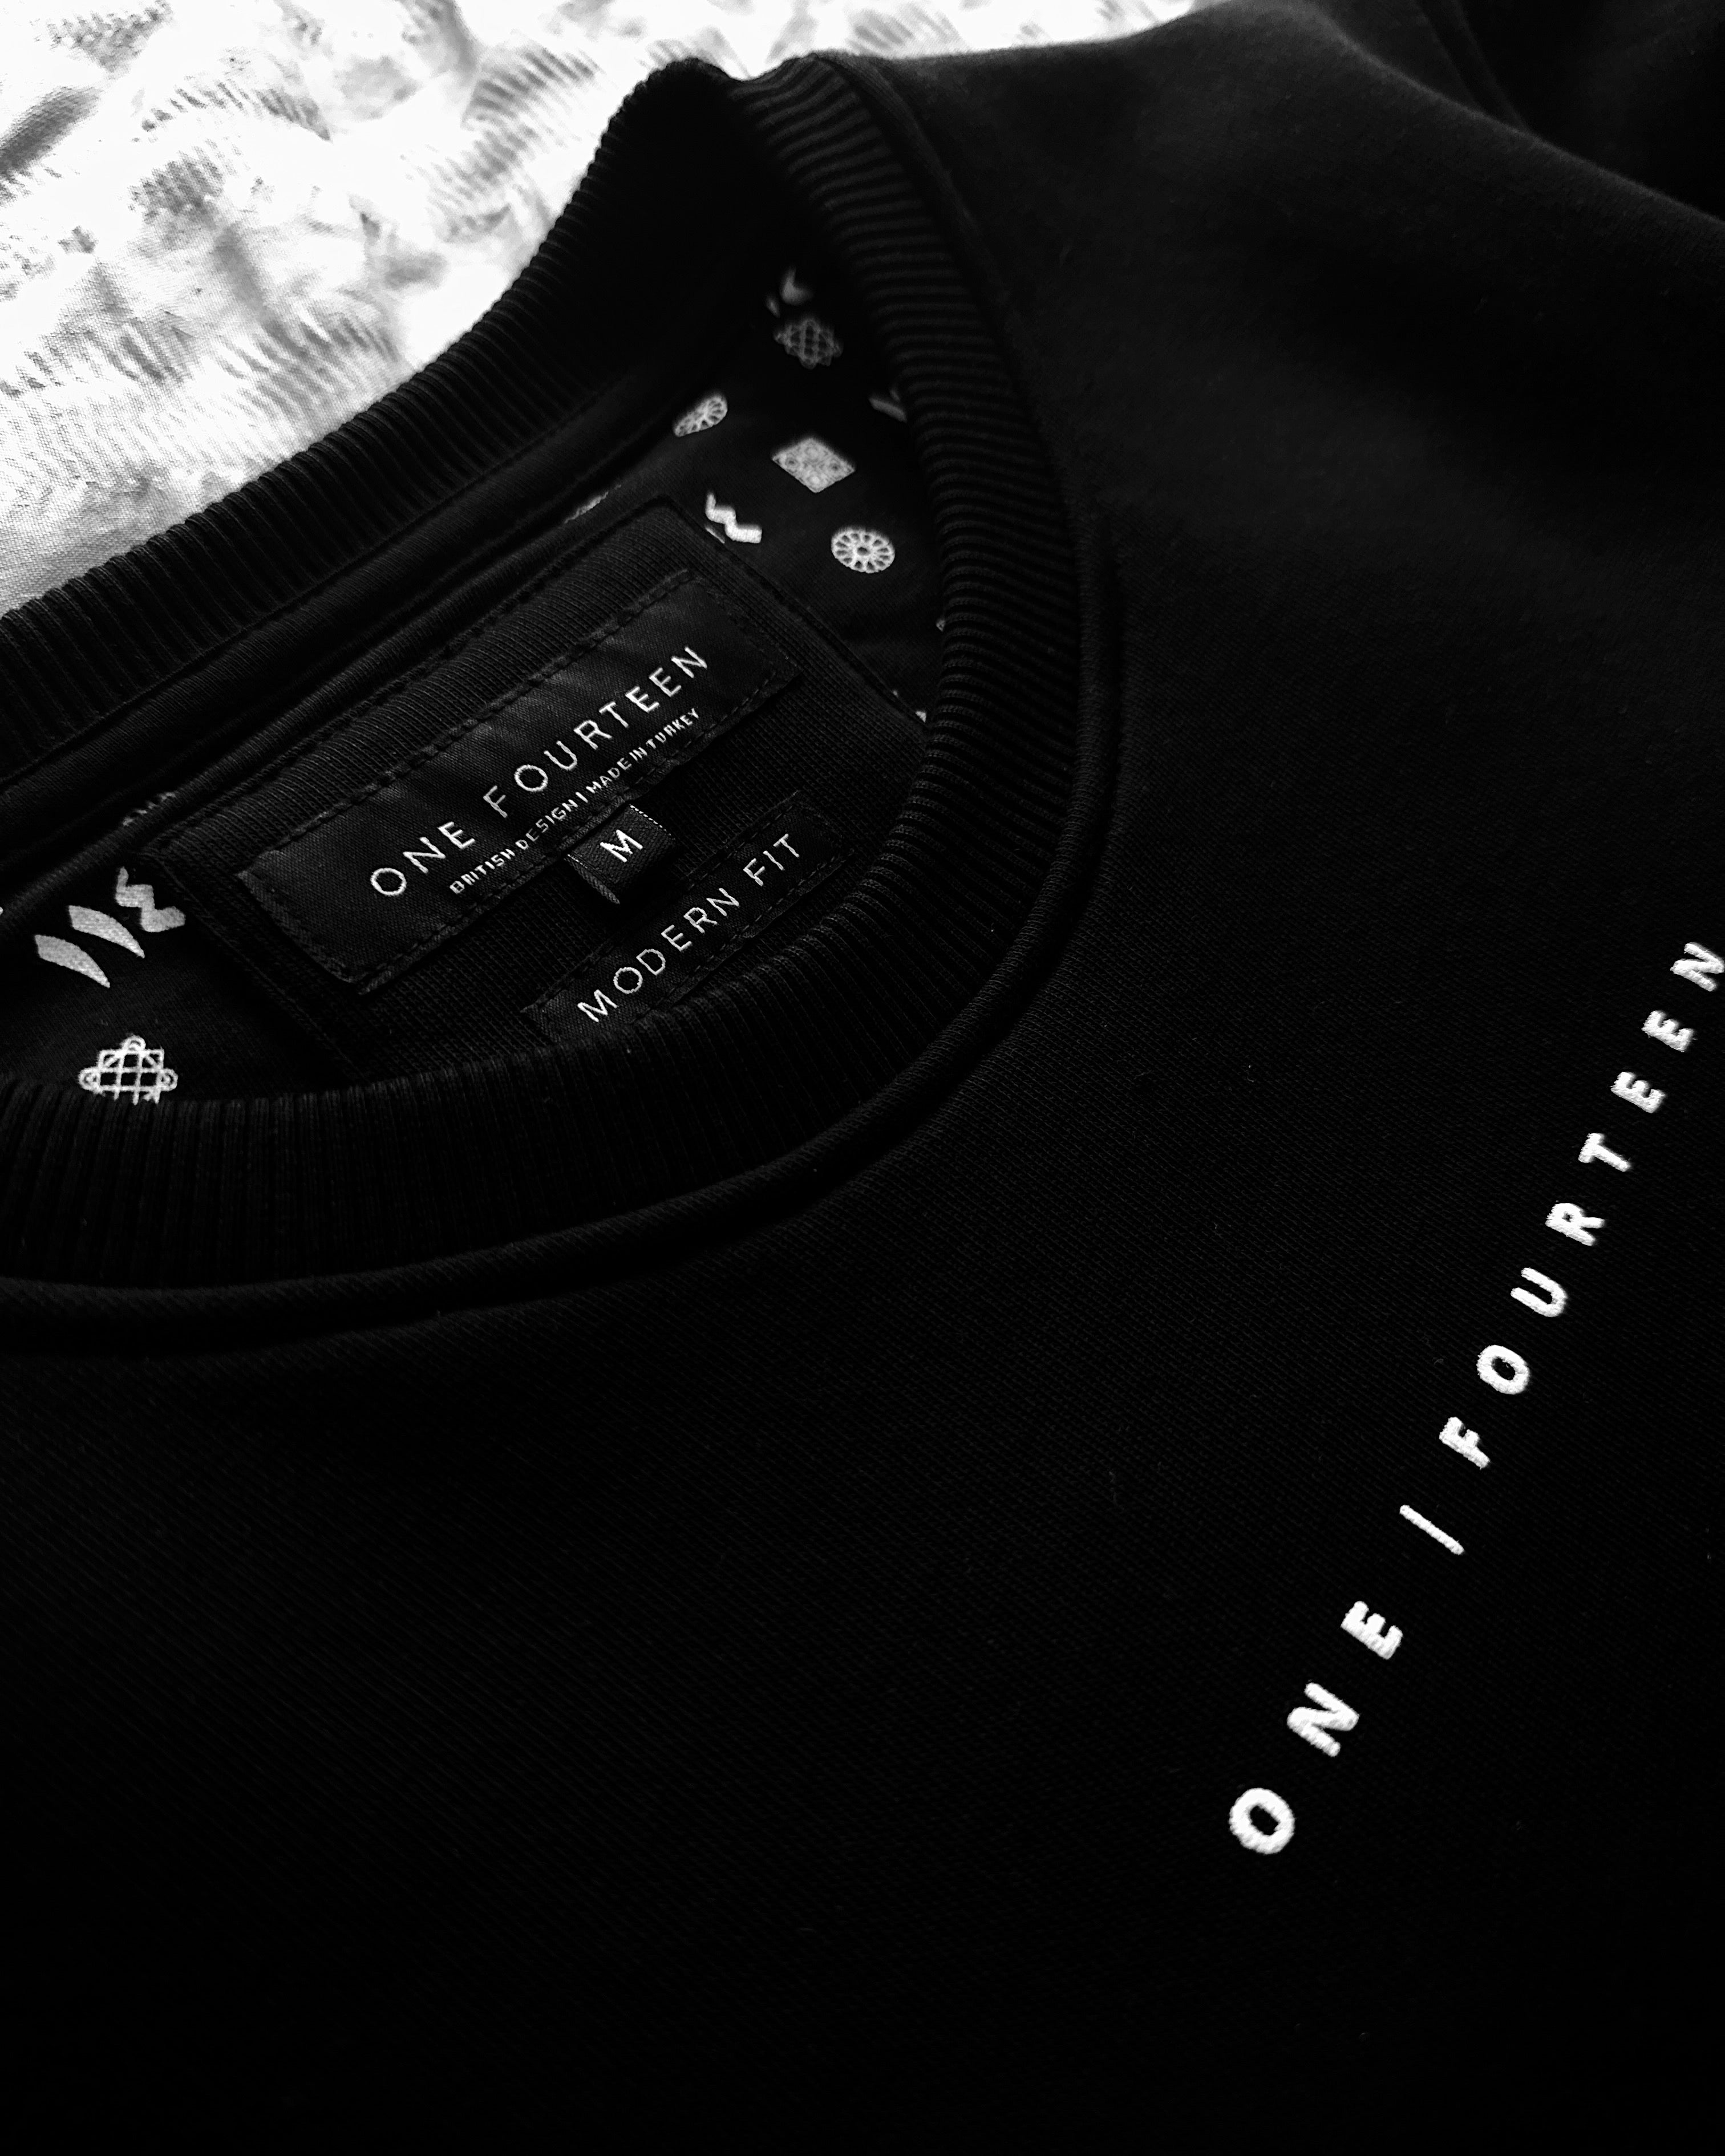 Brunei black premium sweatshirt - One fourteen apparel